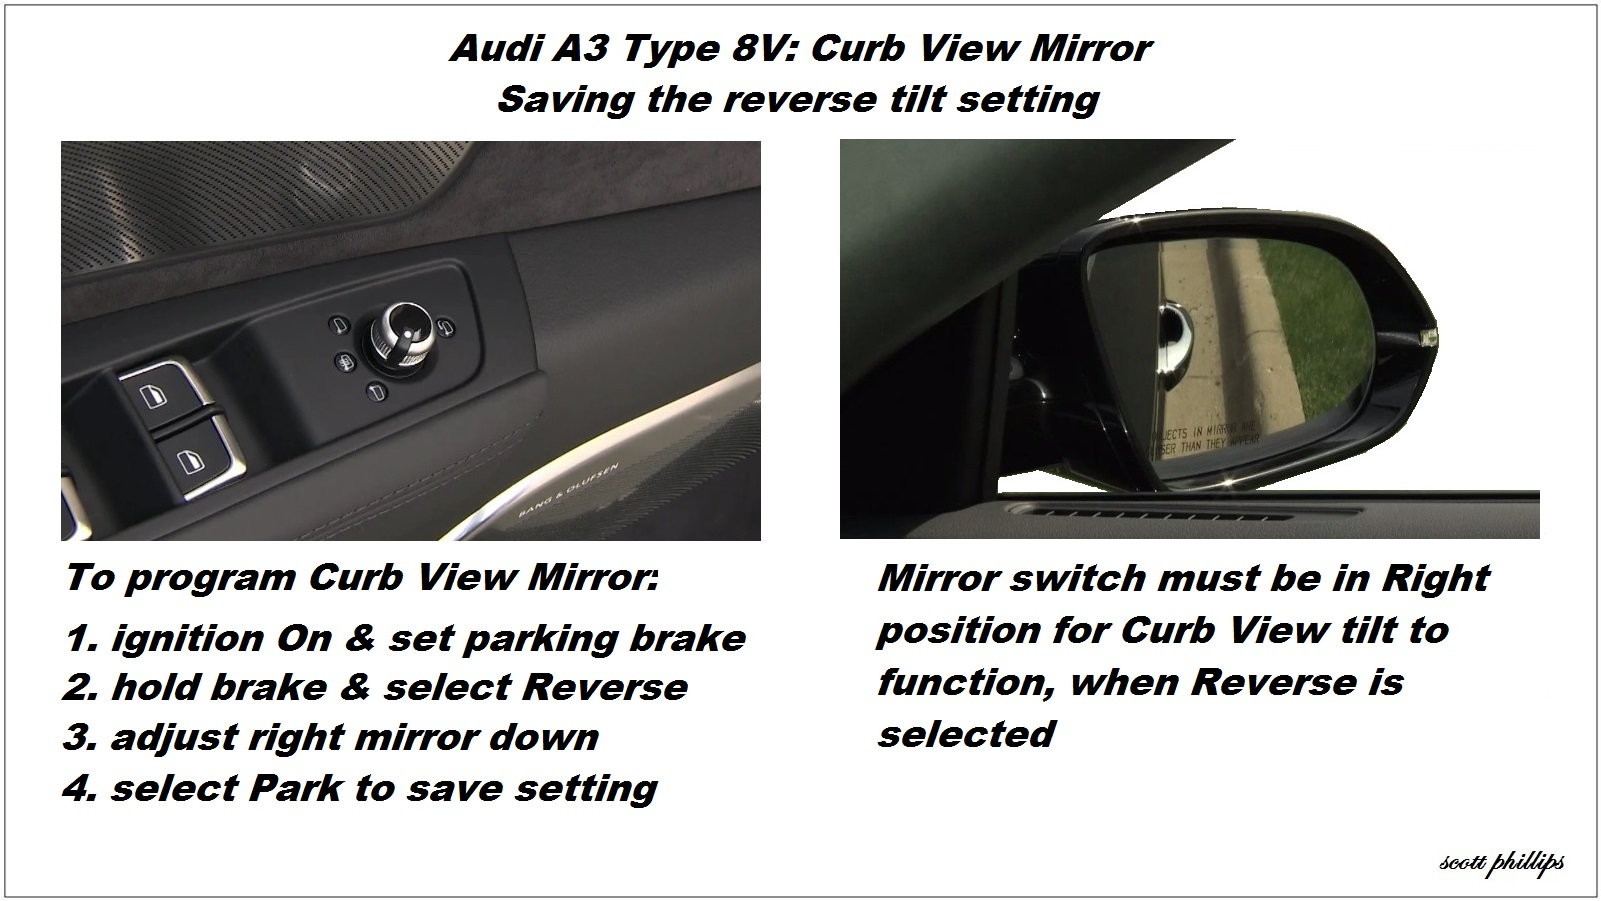 Curb View mirror tilt in reverse